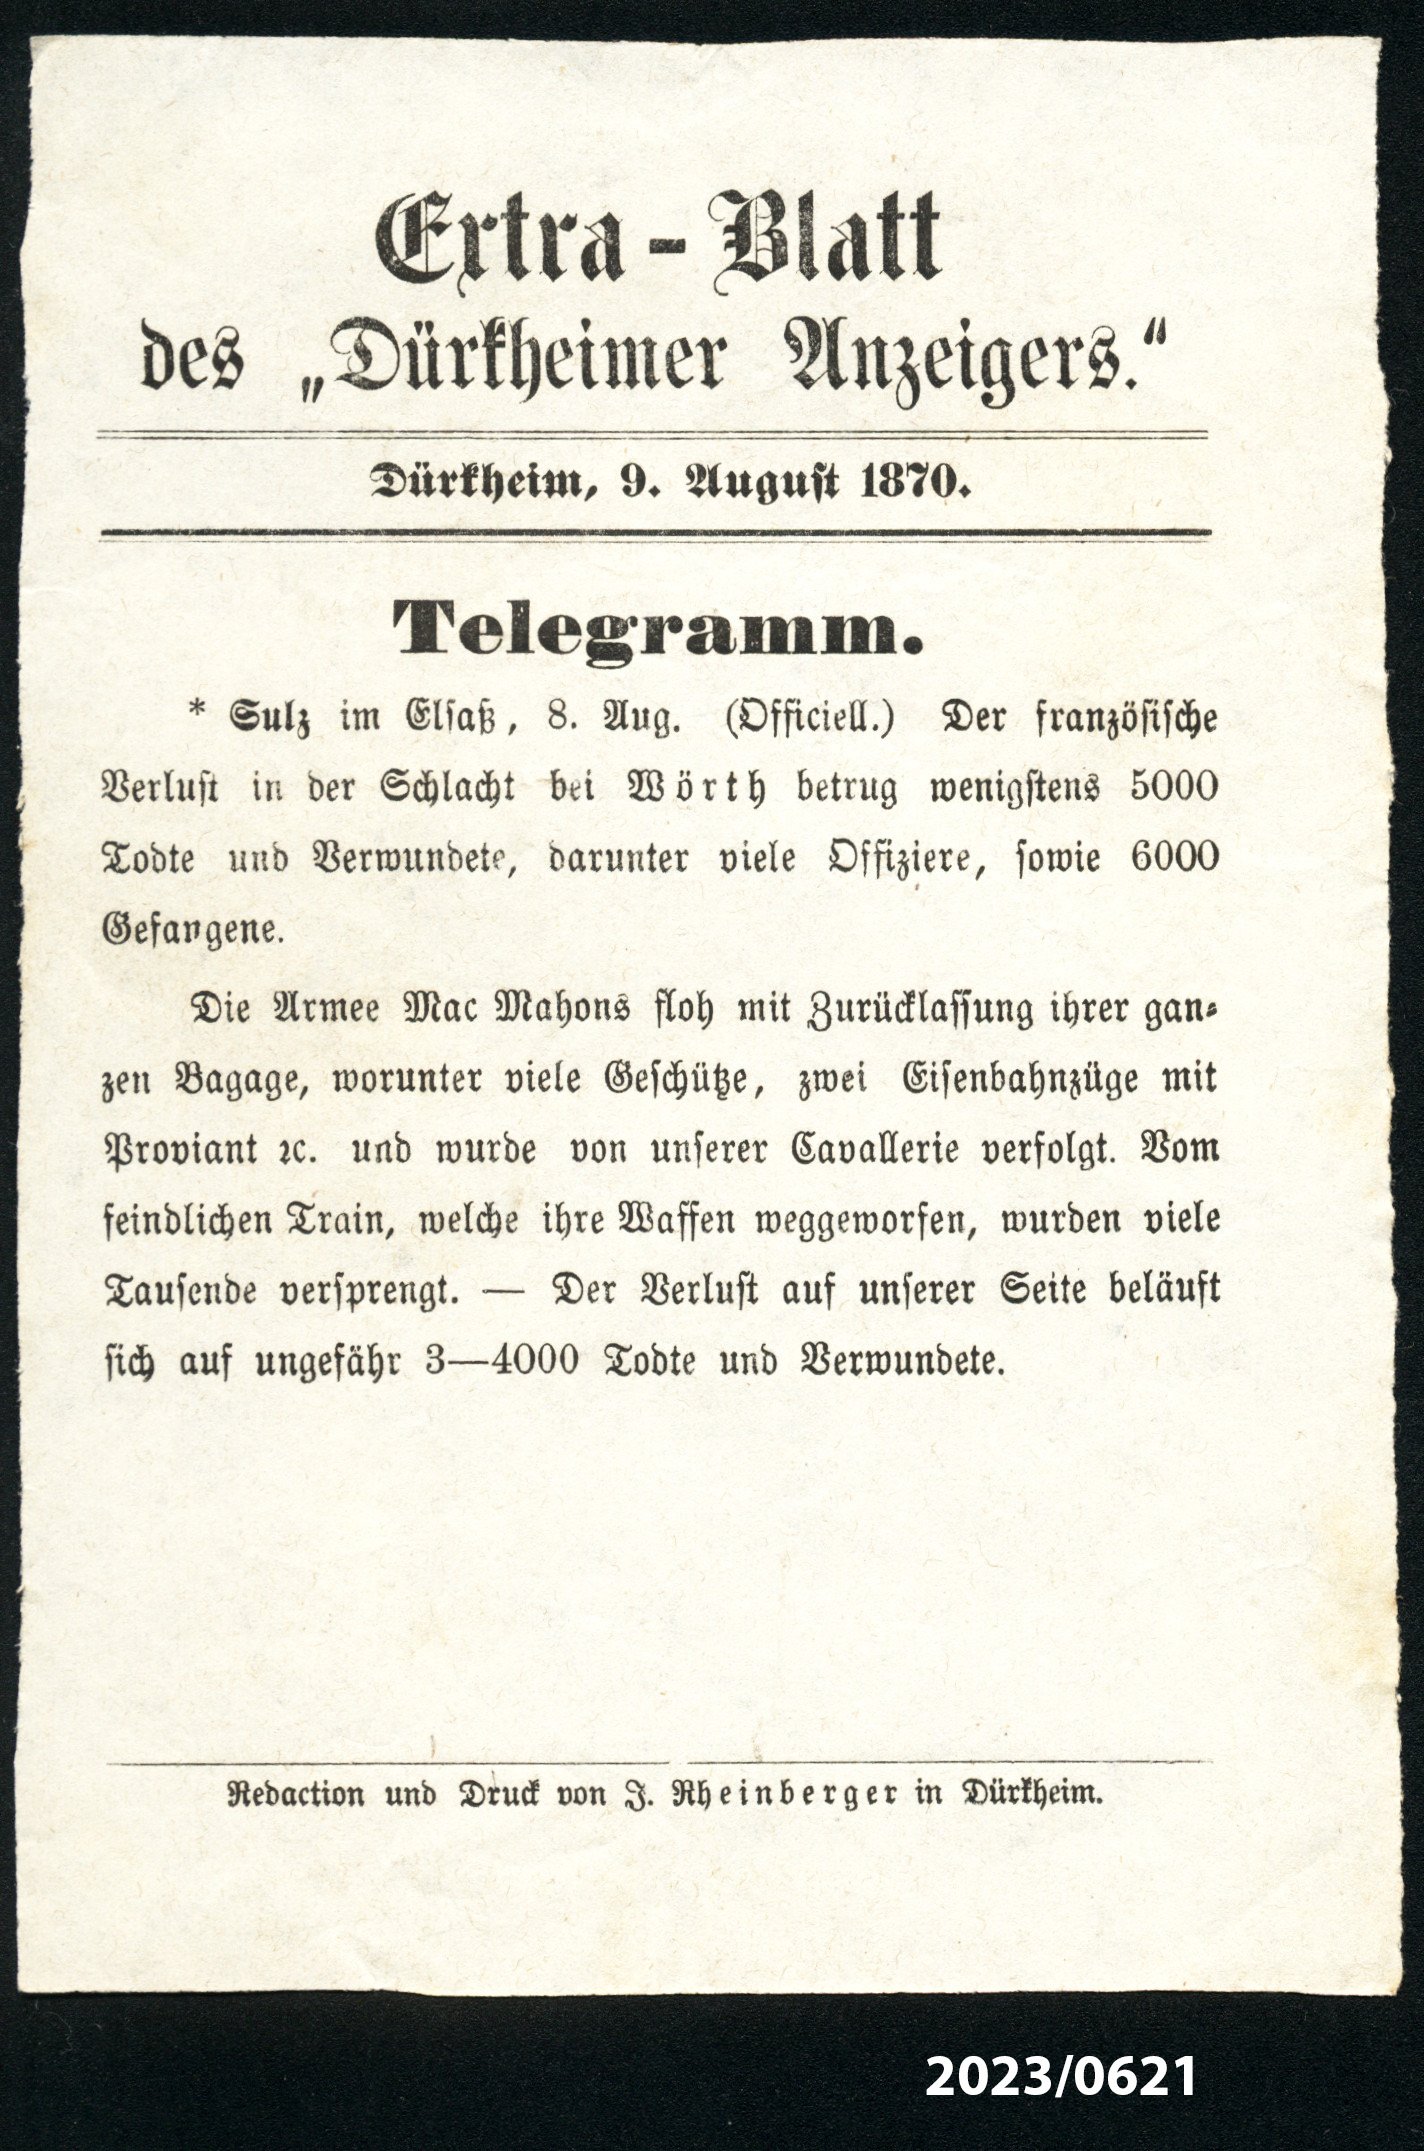 Extra-Blatt des "Dürkheimer Anzeigers" 9.8.1870 (Stadtmuseum Bad Dürkheim im Kulturzentrum Haus Catoir CC BY-NC-SA)